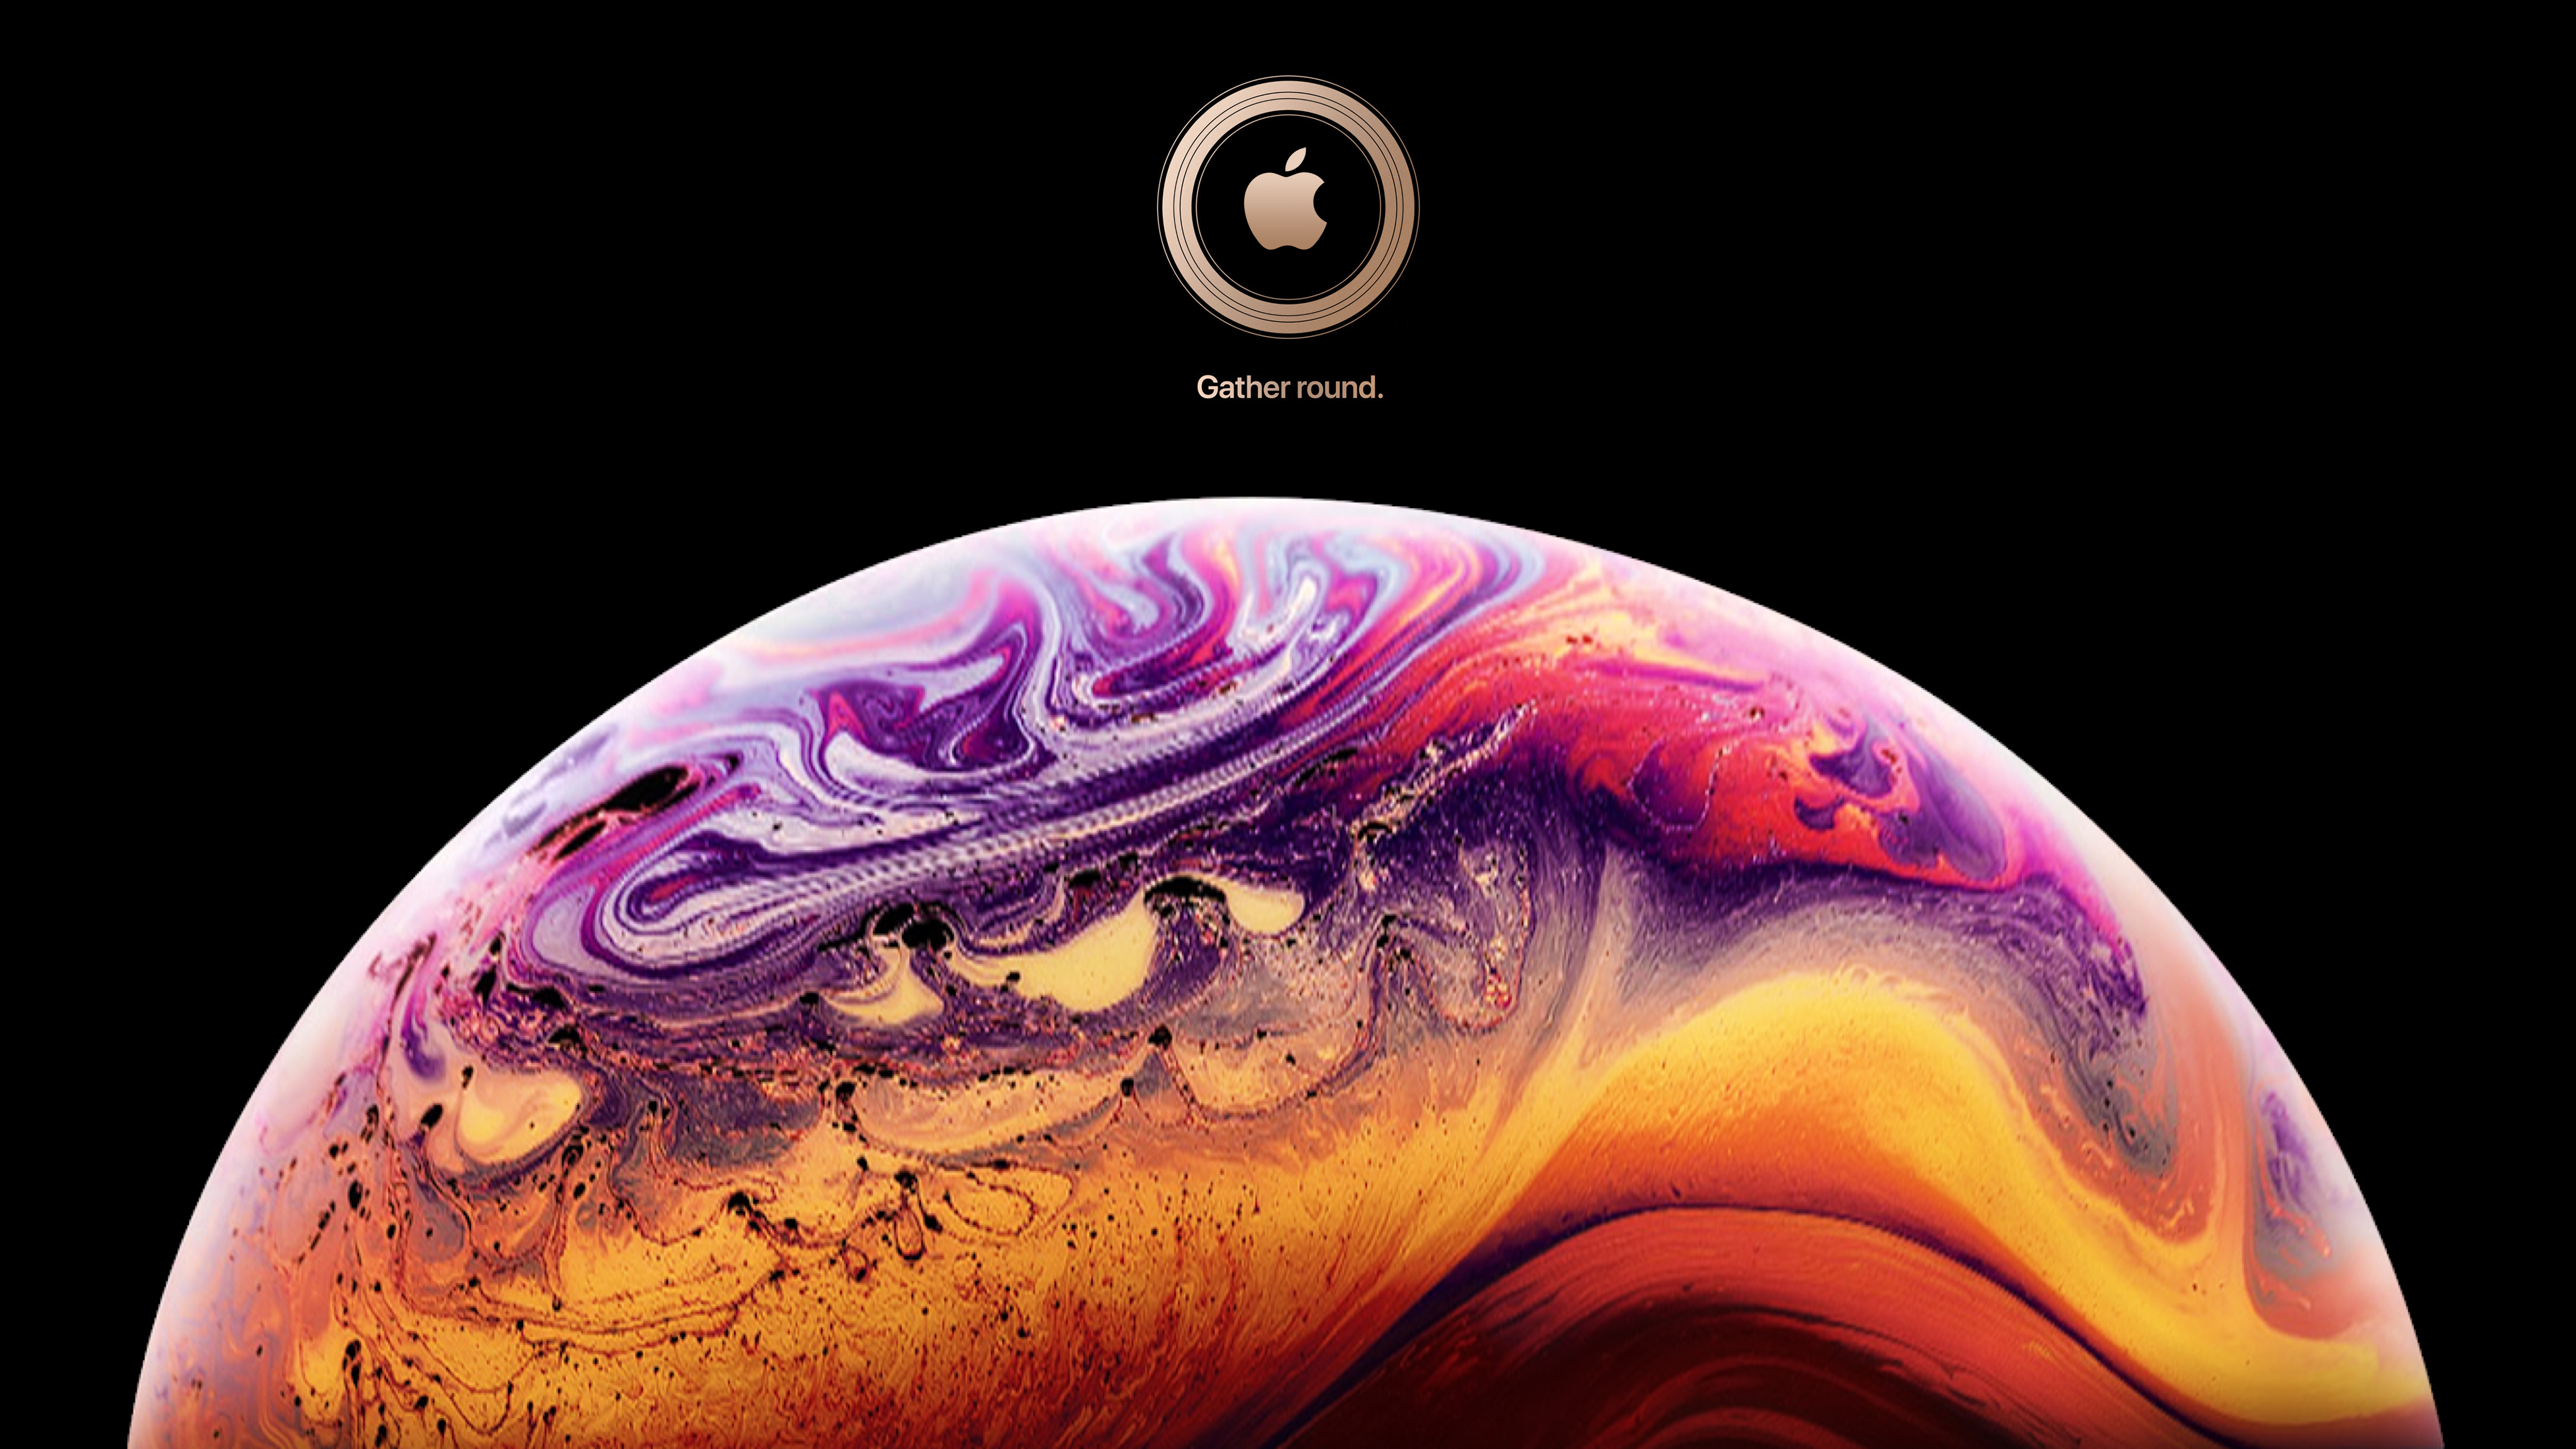 iOS 12 Wallpaper 4K, iPhone XS, Stock, Technology, #1568